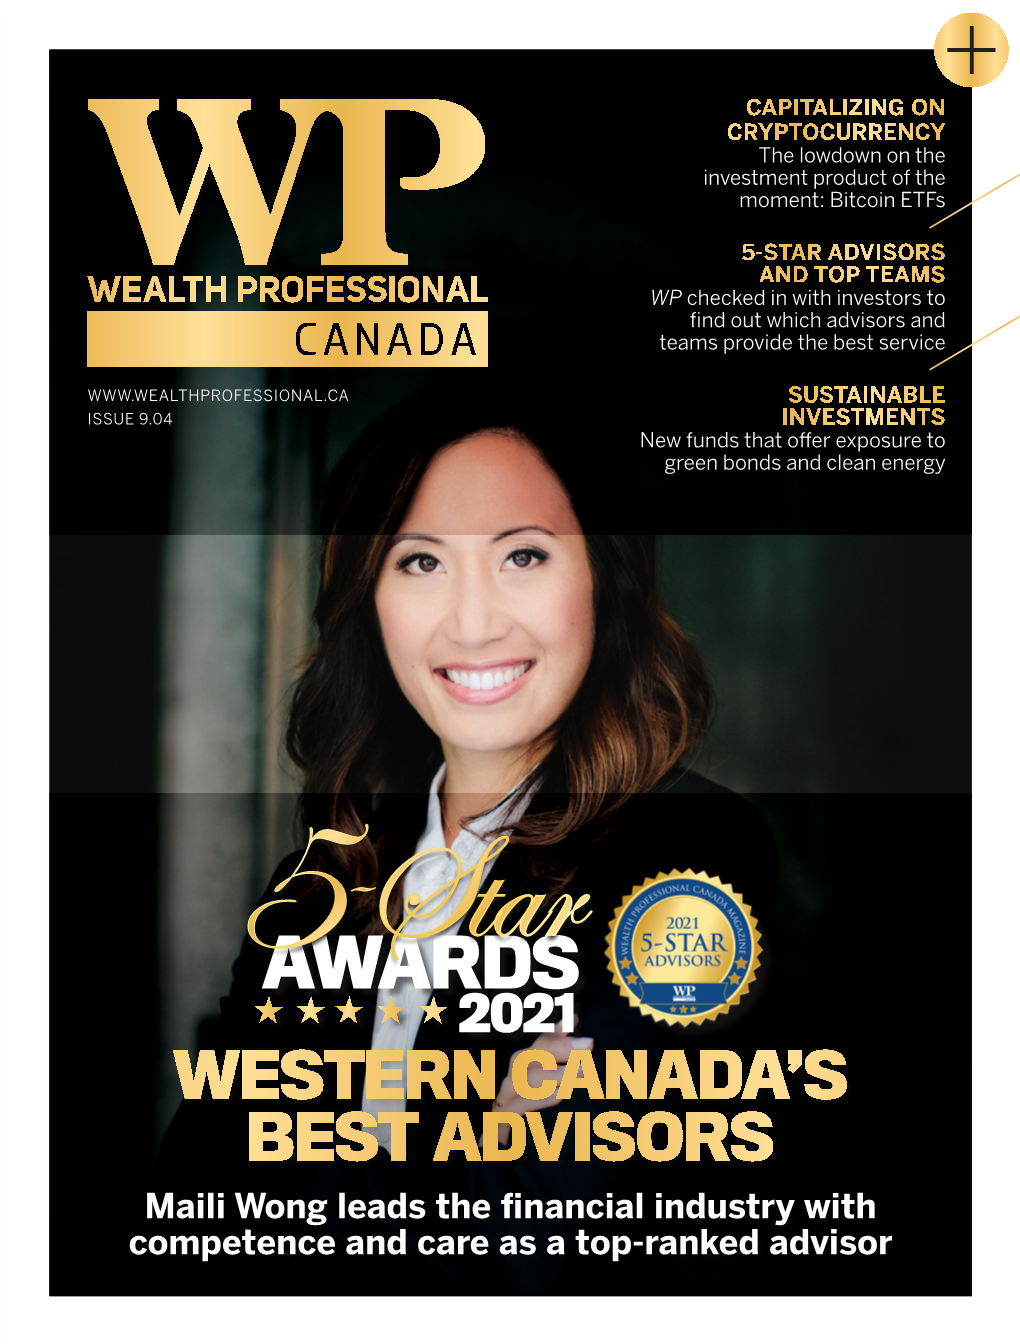 Western Canada's Best Advisors